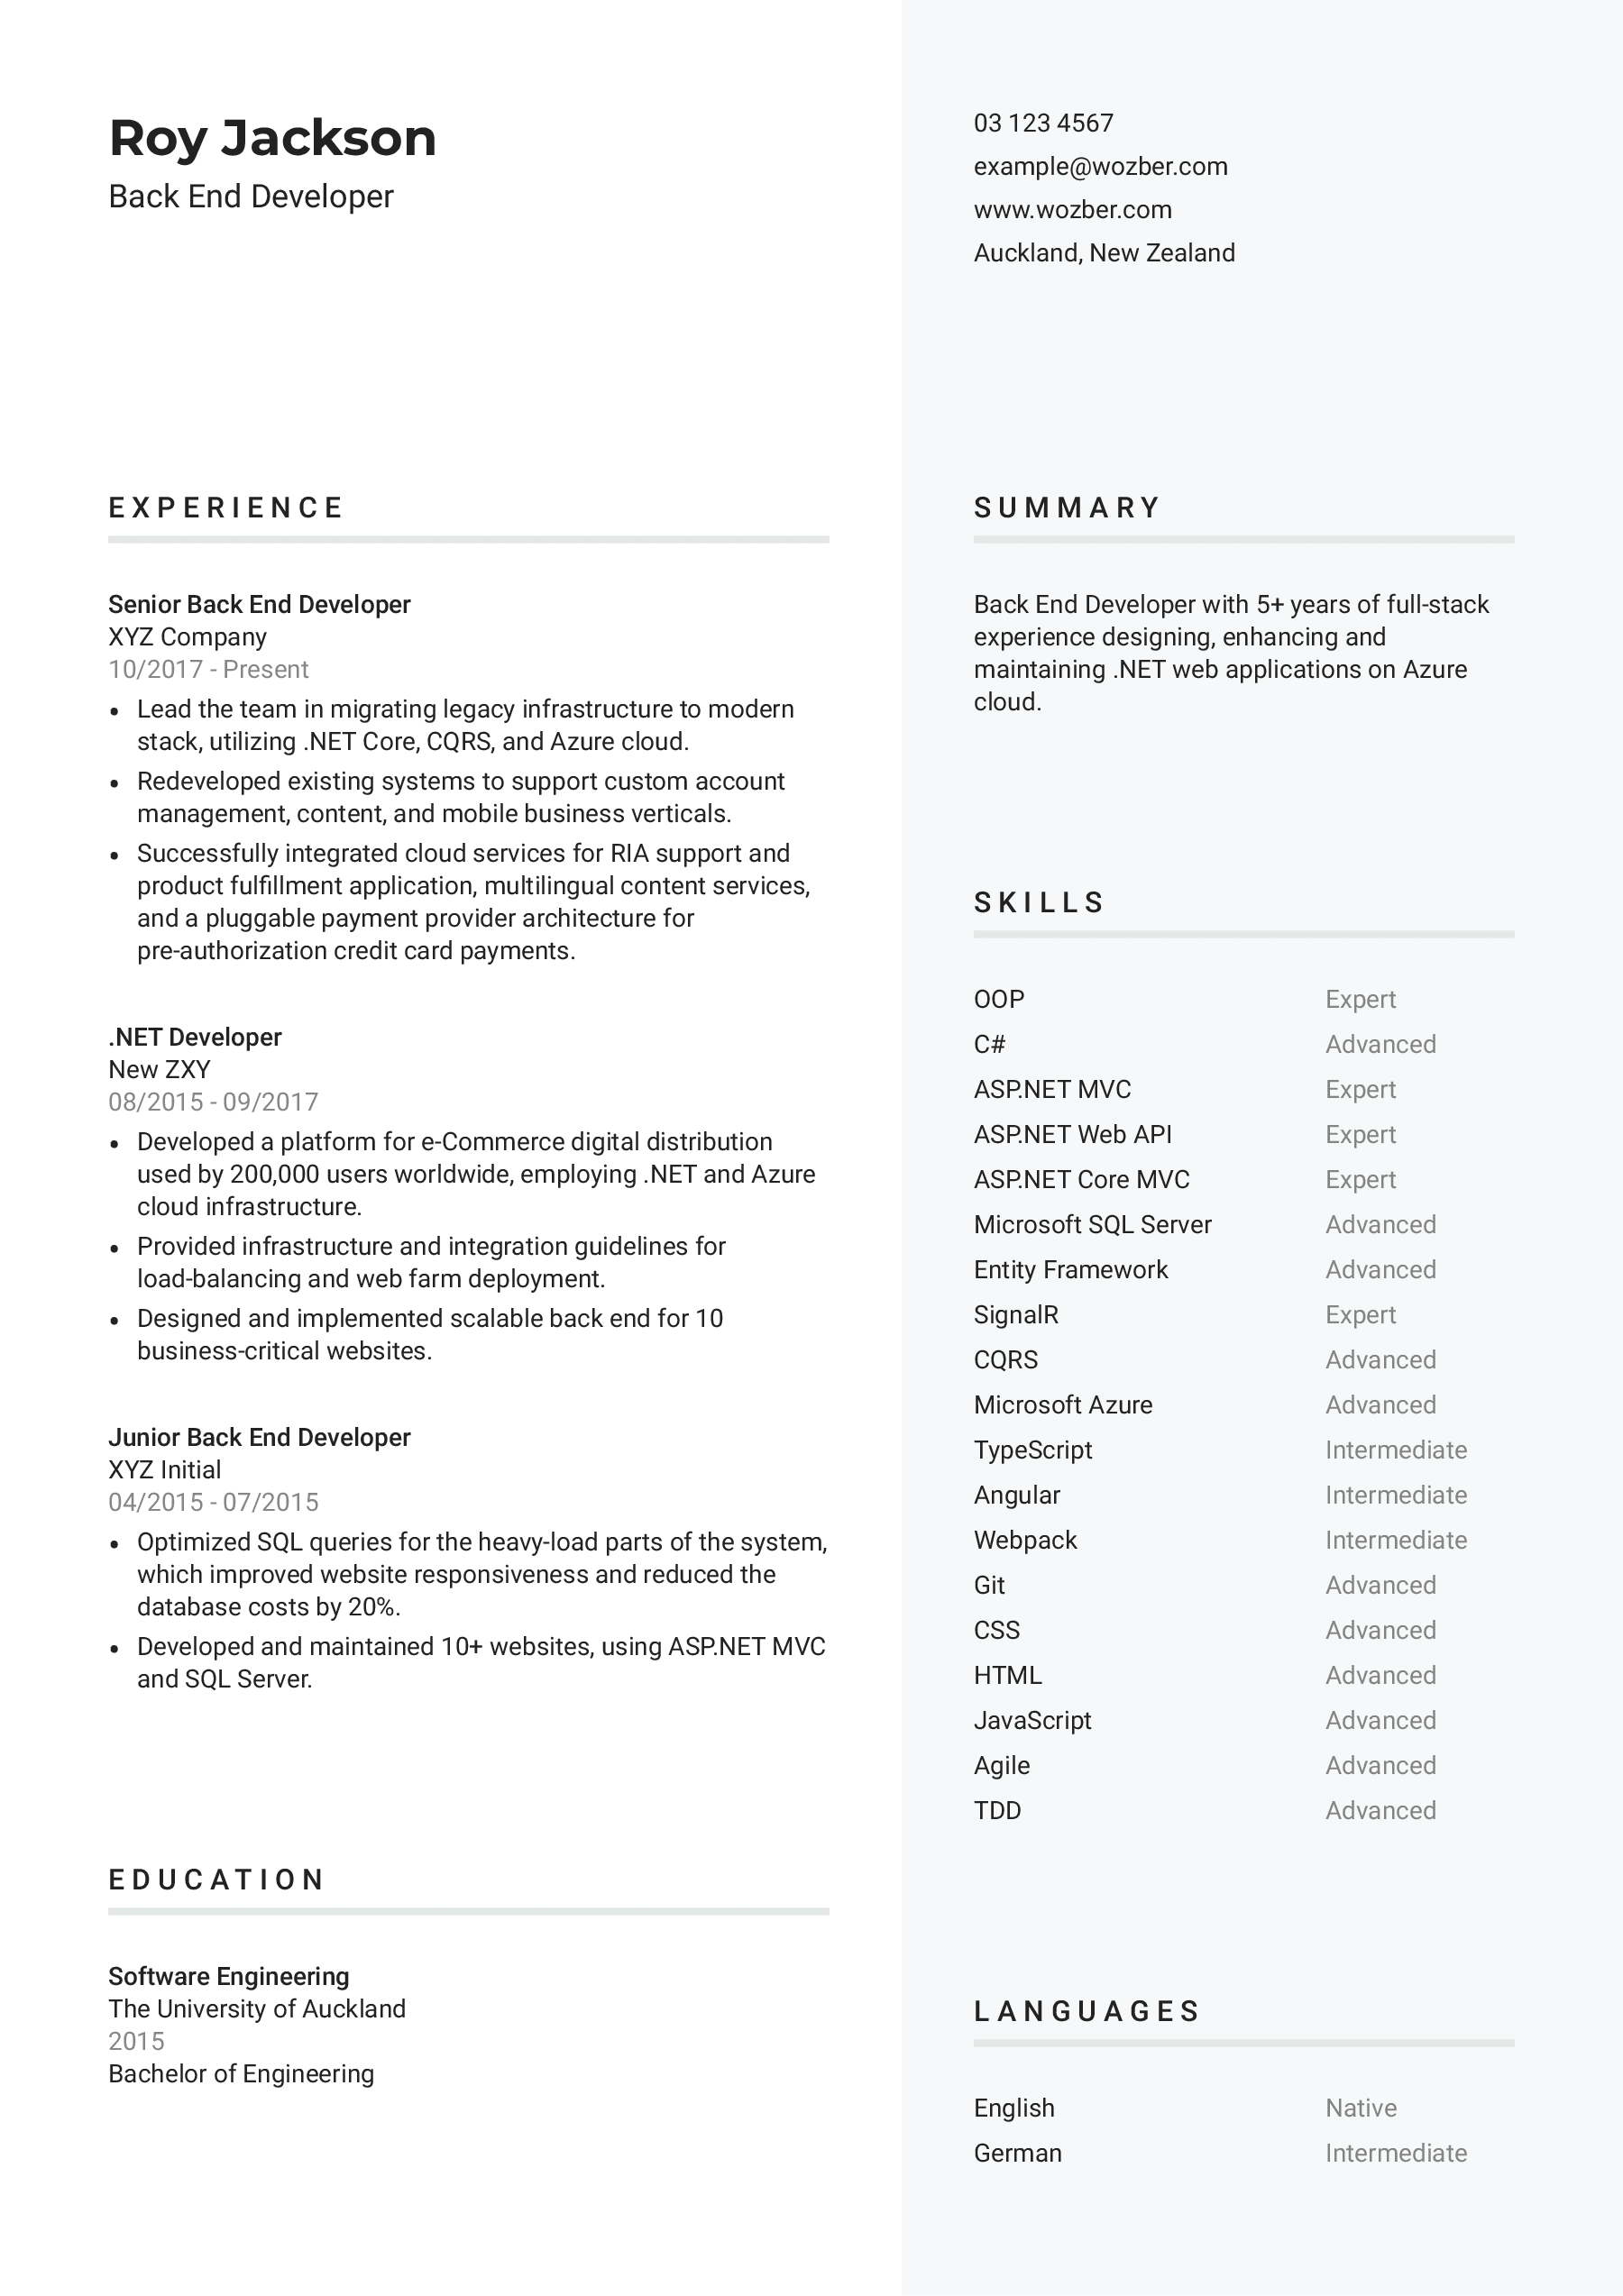 Modern resume example for Back End Developer position